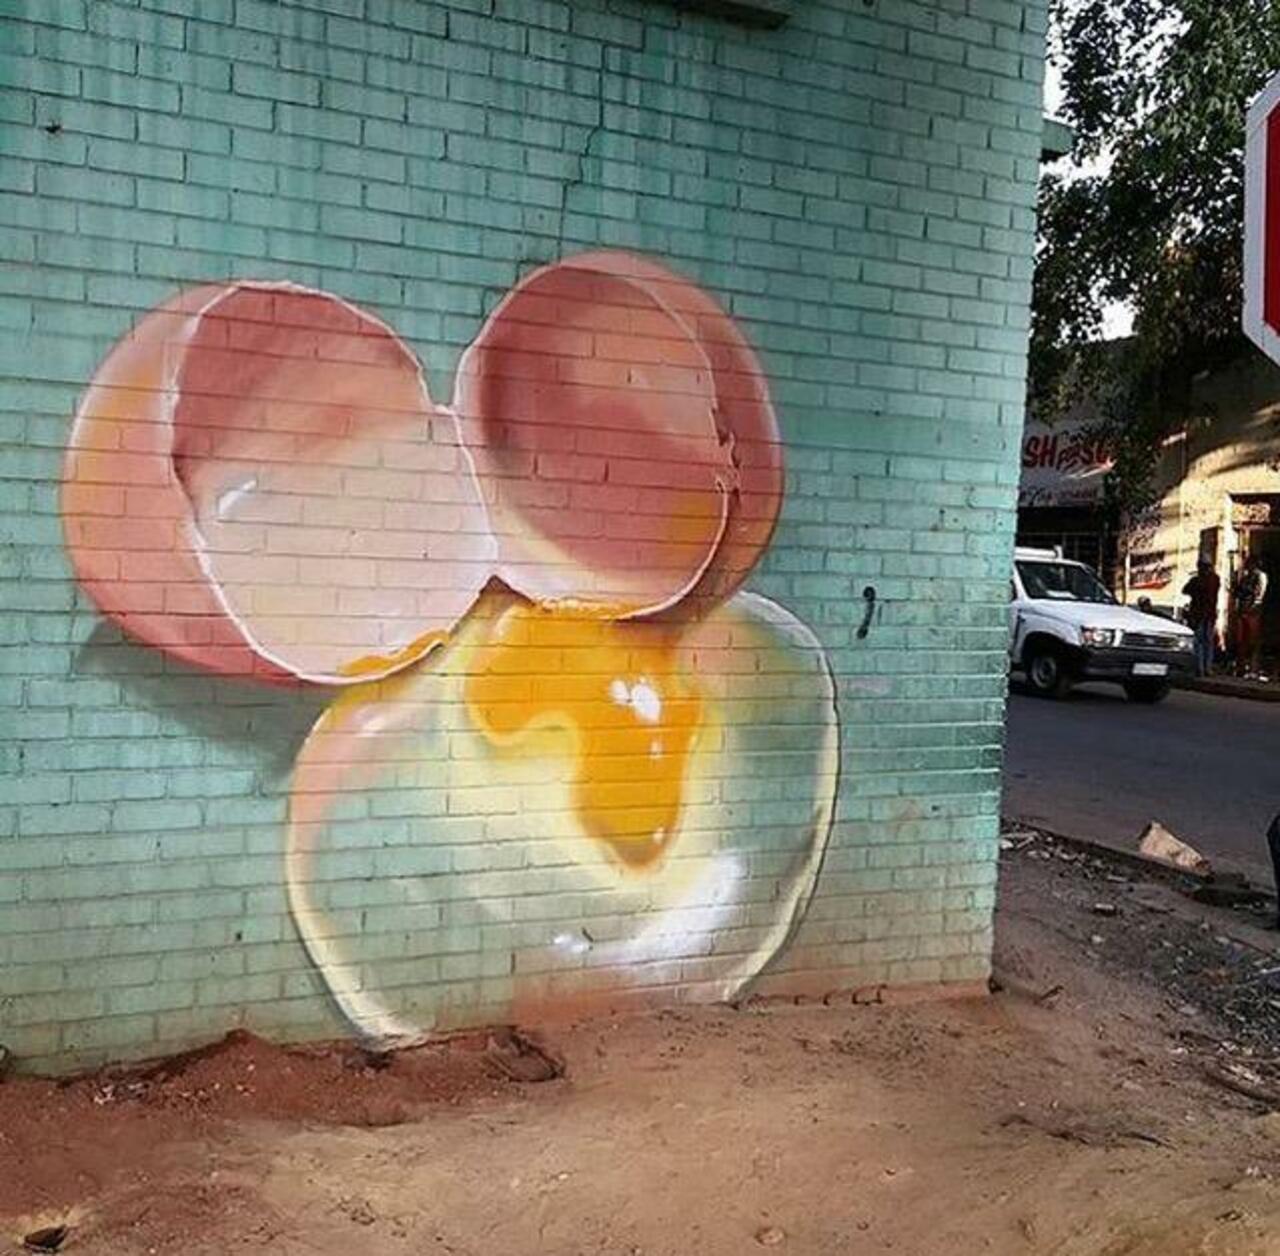 Street Art by falco1 in Johannesburg SA  

#art #graffiti #mural #streetart http://t.co/6F9BgPFeQx